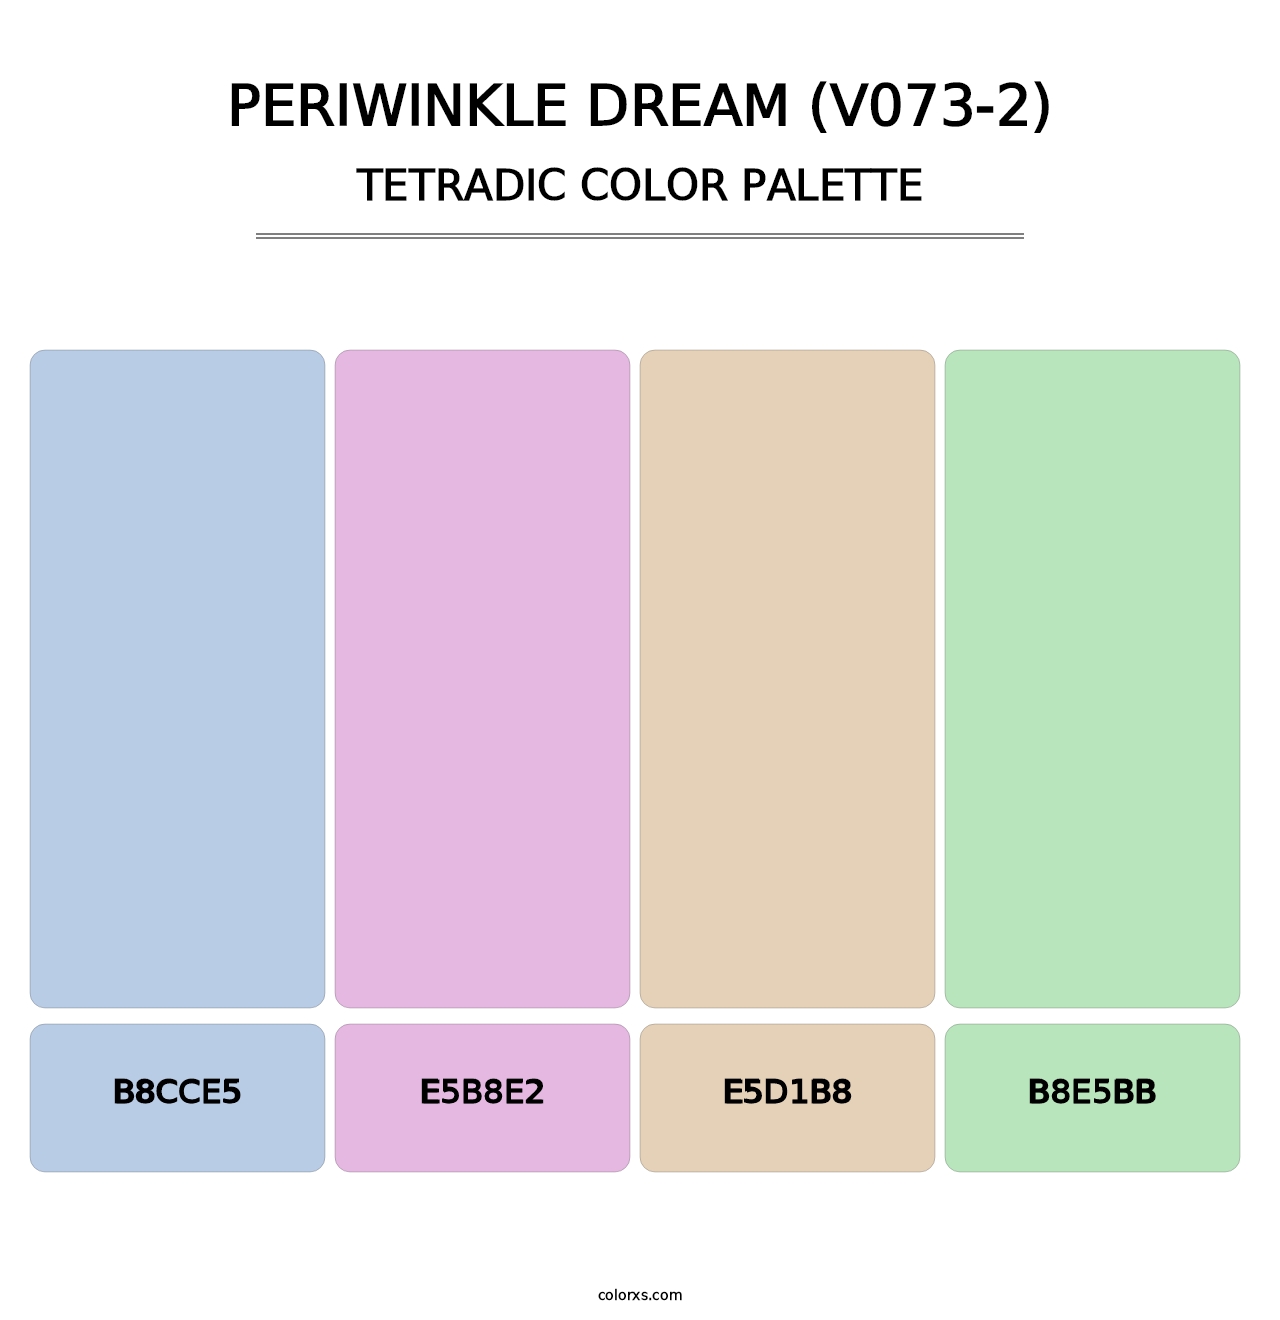 Periwinkle Dream (V073-2) - Tetradic Color Palette